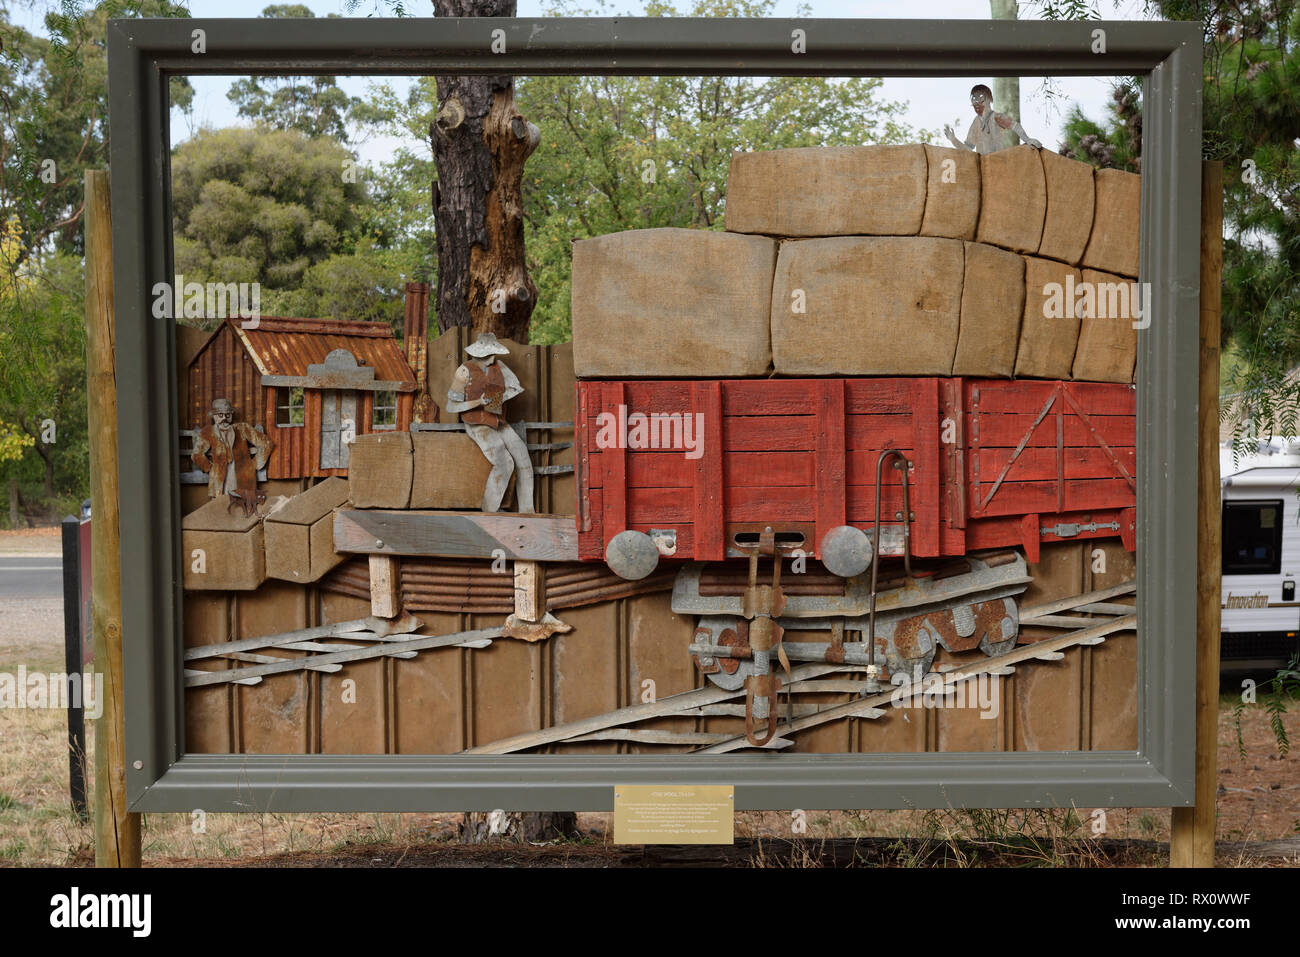 “The Wool Train”, a work by local artist Stuart Spragg using recycled materials, Maldon railway station, Victoria, Australia. Stock Photo